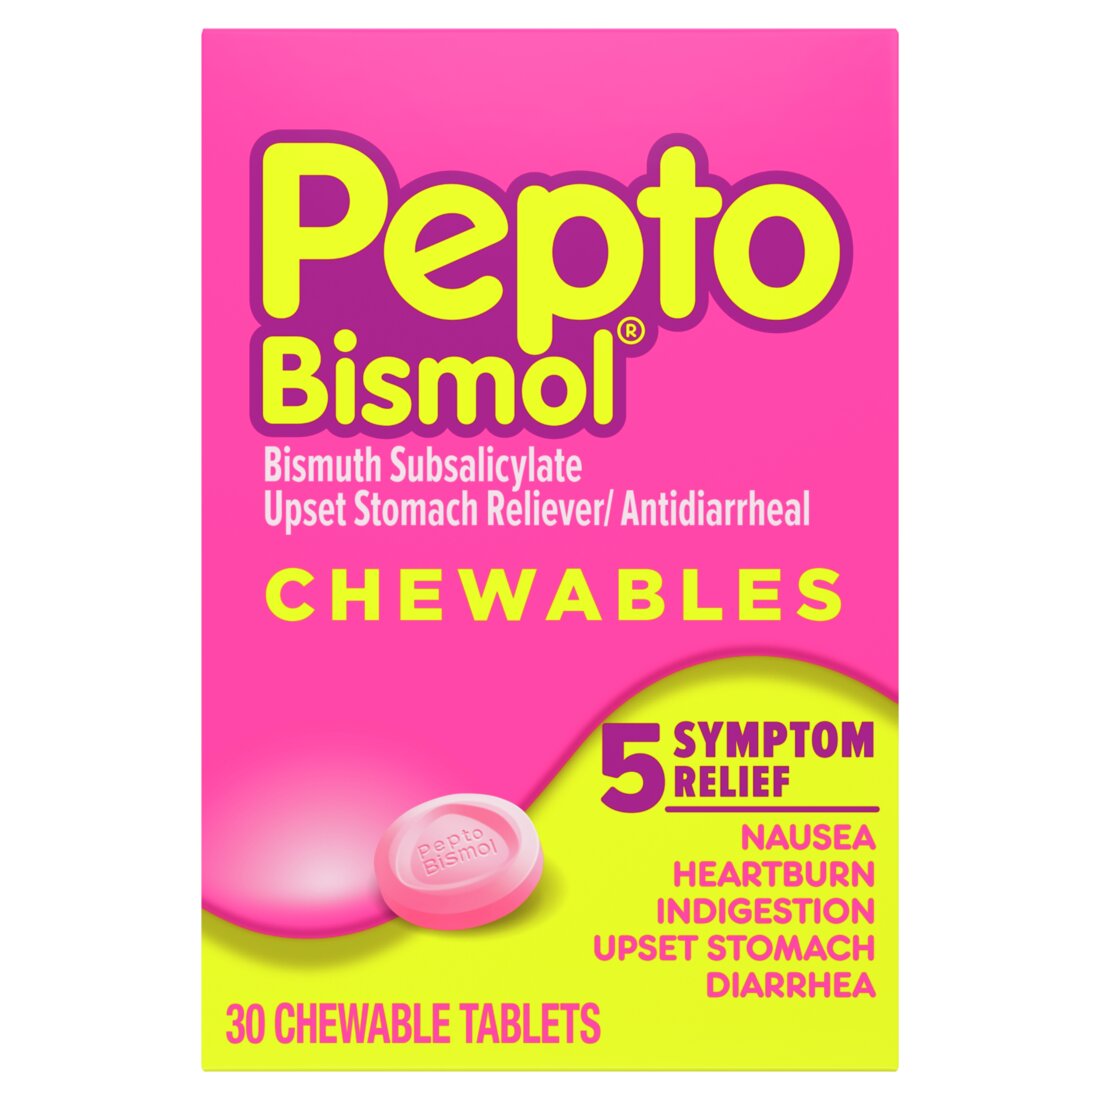 Pepto Bismol Chewable Tablets for 5 Symptom Fast Relief Original Flavor - 30ct/24pk